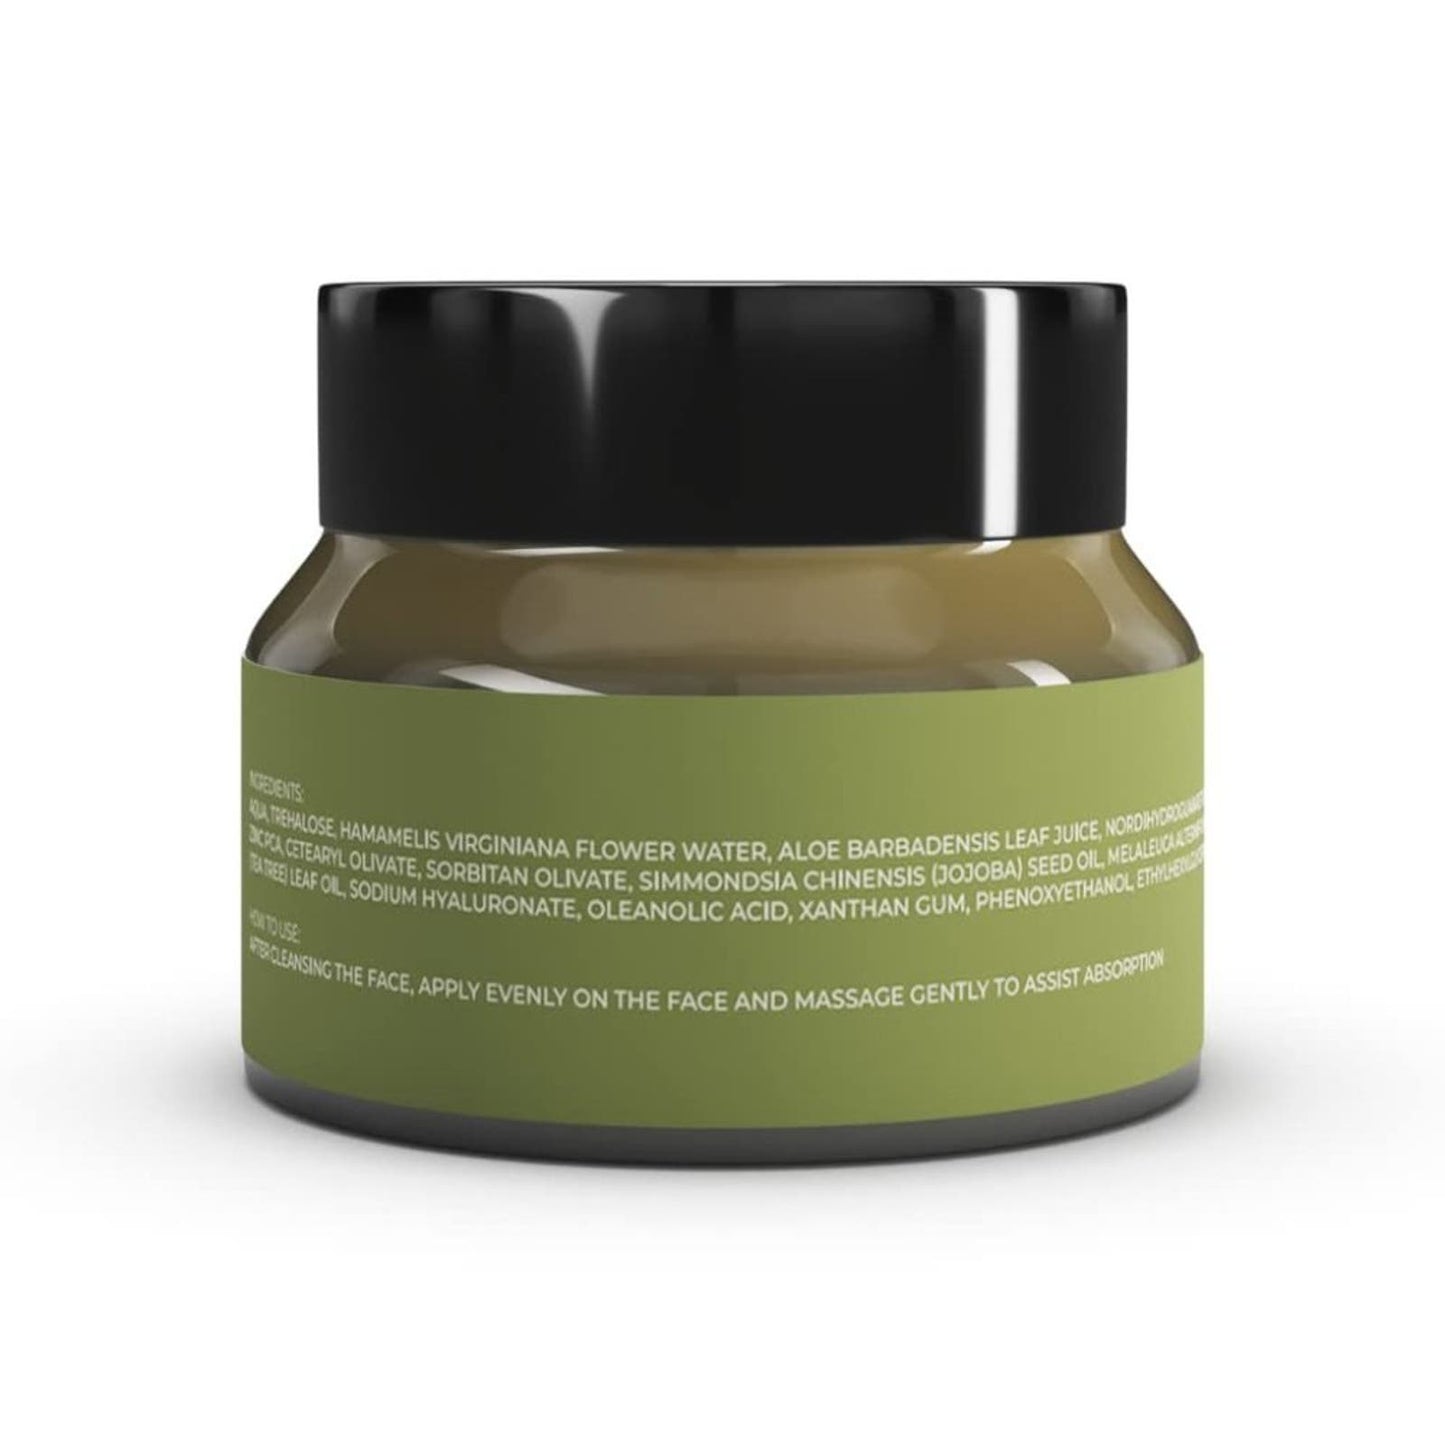 Brandnu Tea Tree Face Cream - Moisturizer for Acne-Prone, Sensitive Skin, 1.7 oz